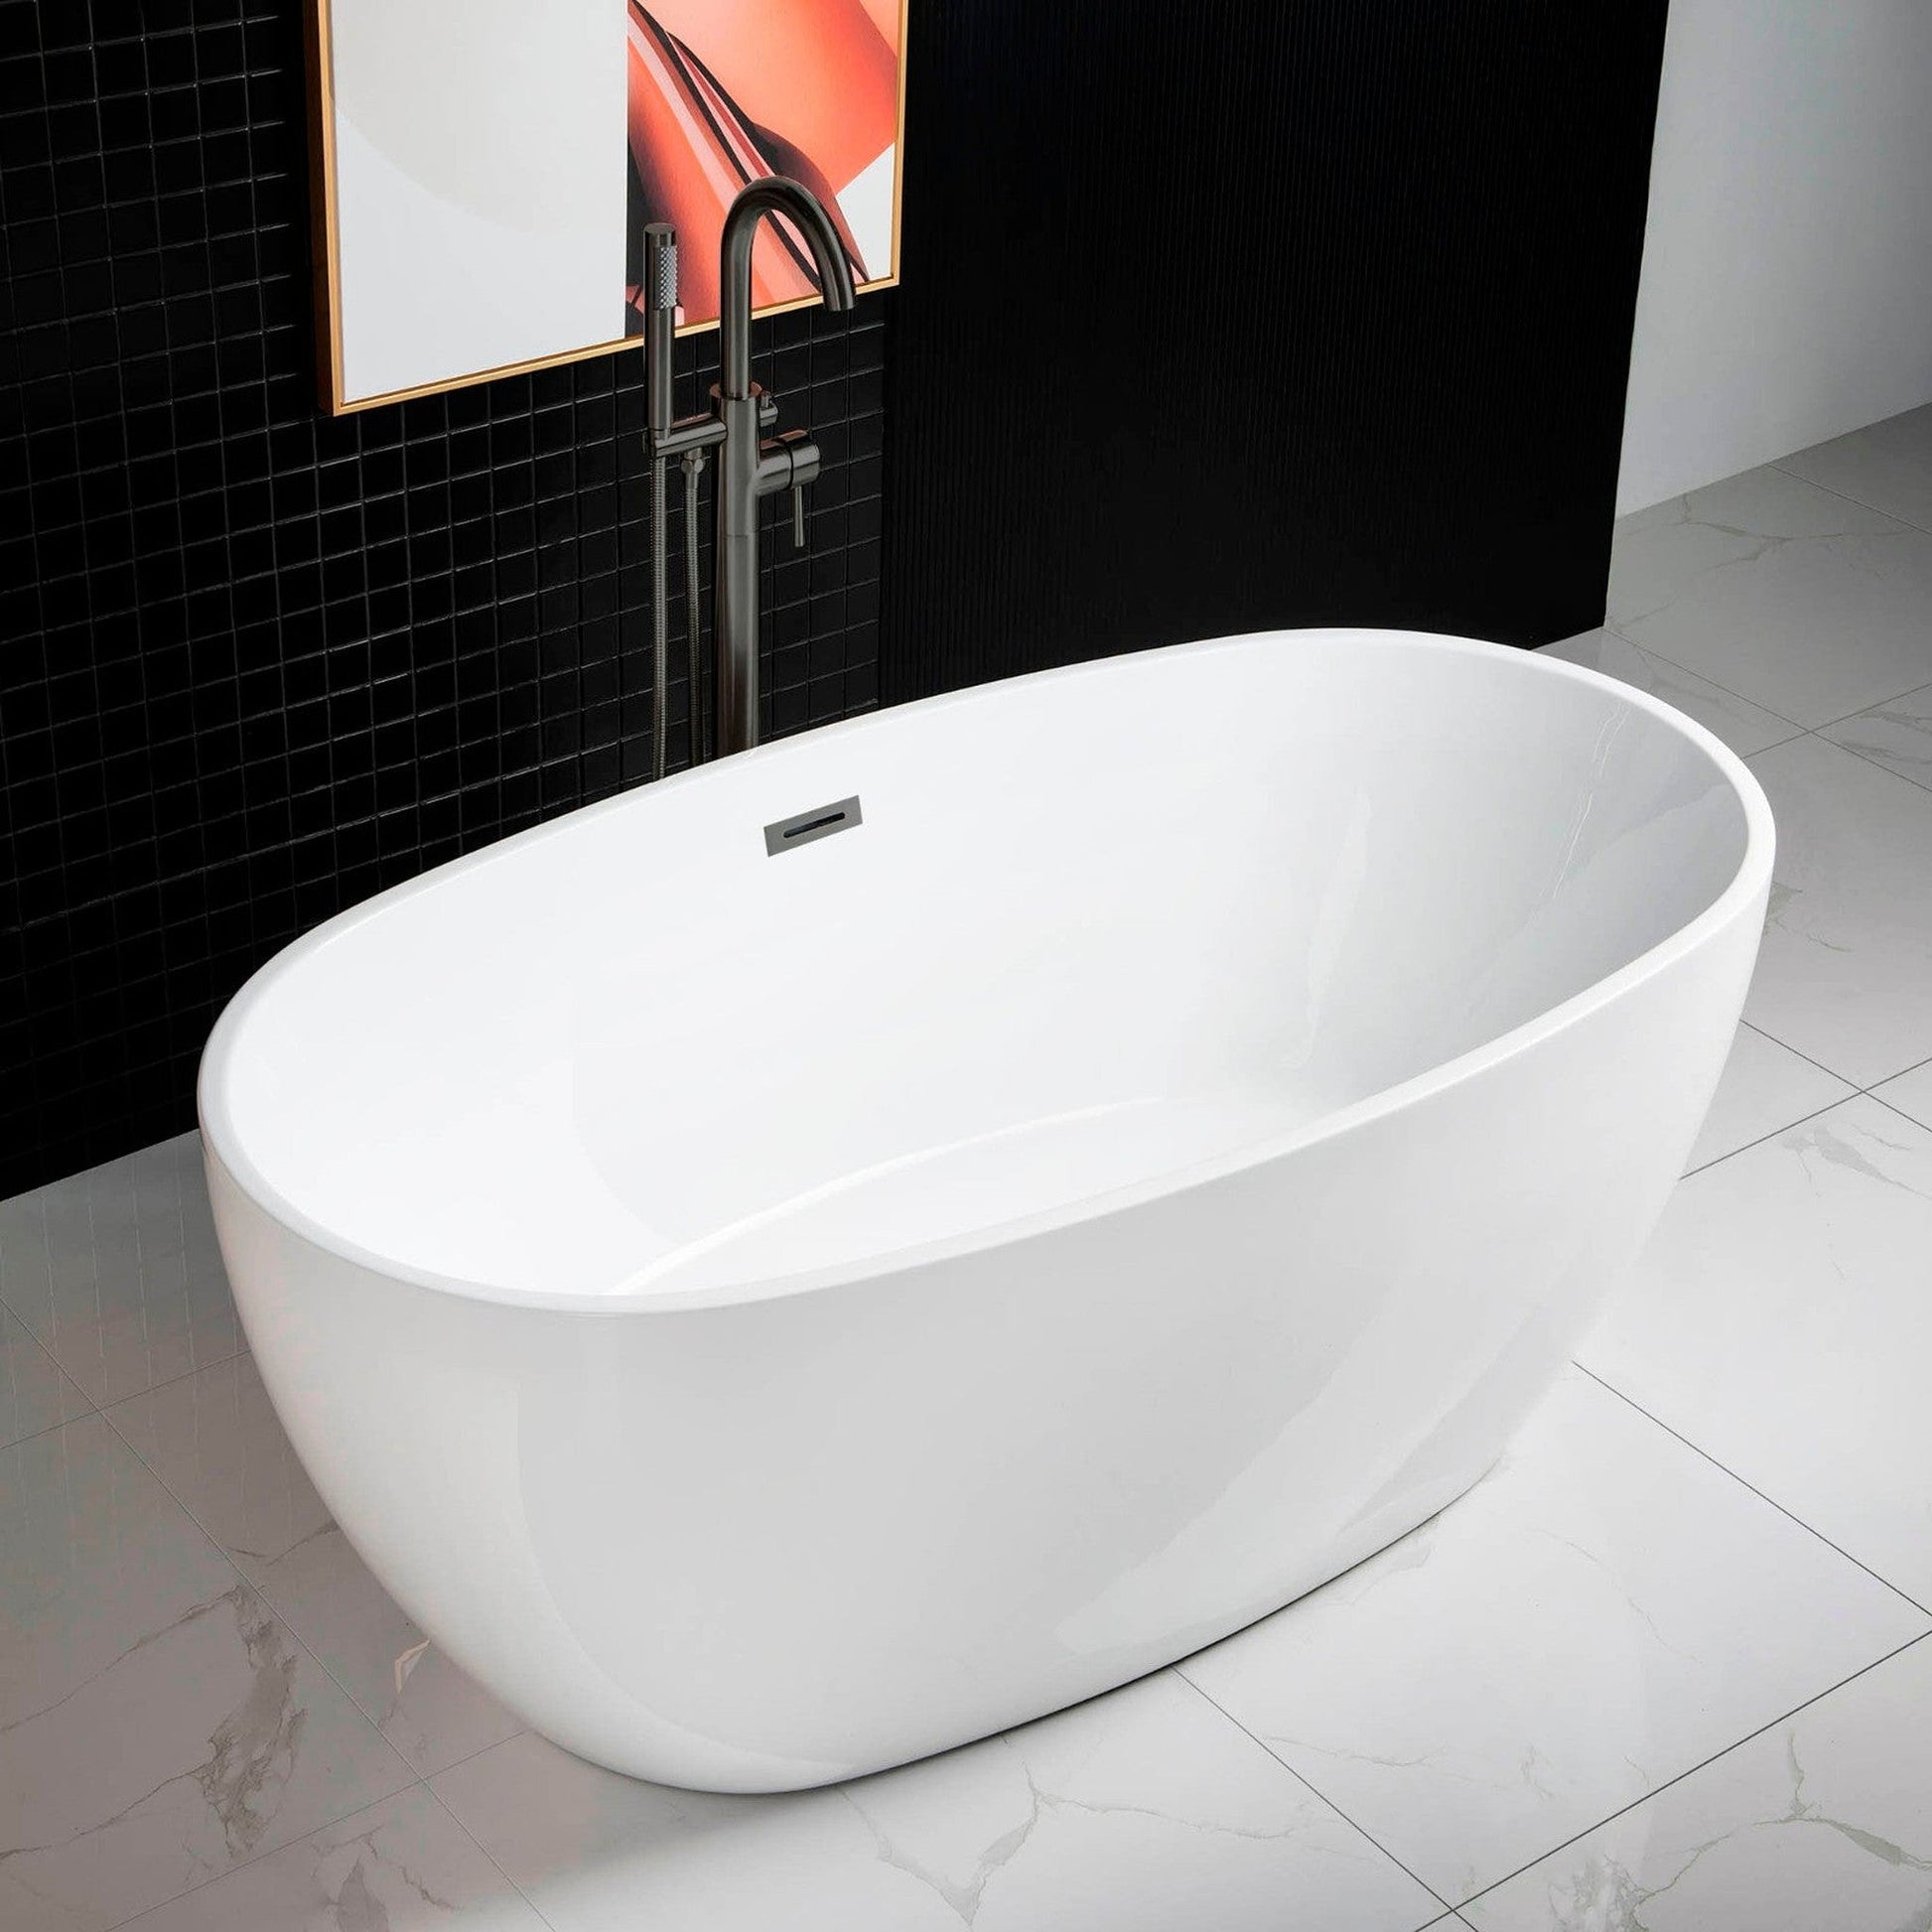 WoodBridge B0018 59" White Acrylic Freestanding Soaking Bathtub With Matte Black Drain, Overflow, F0072MBVT Tub Filler and Caddy Tray